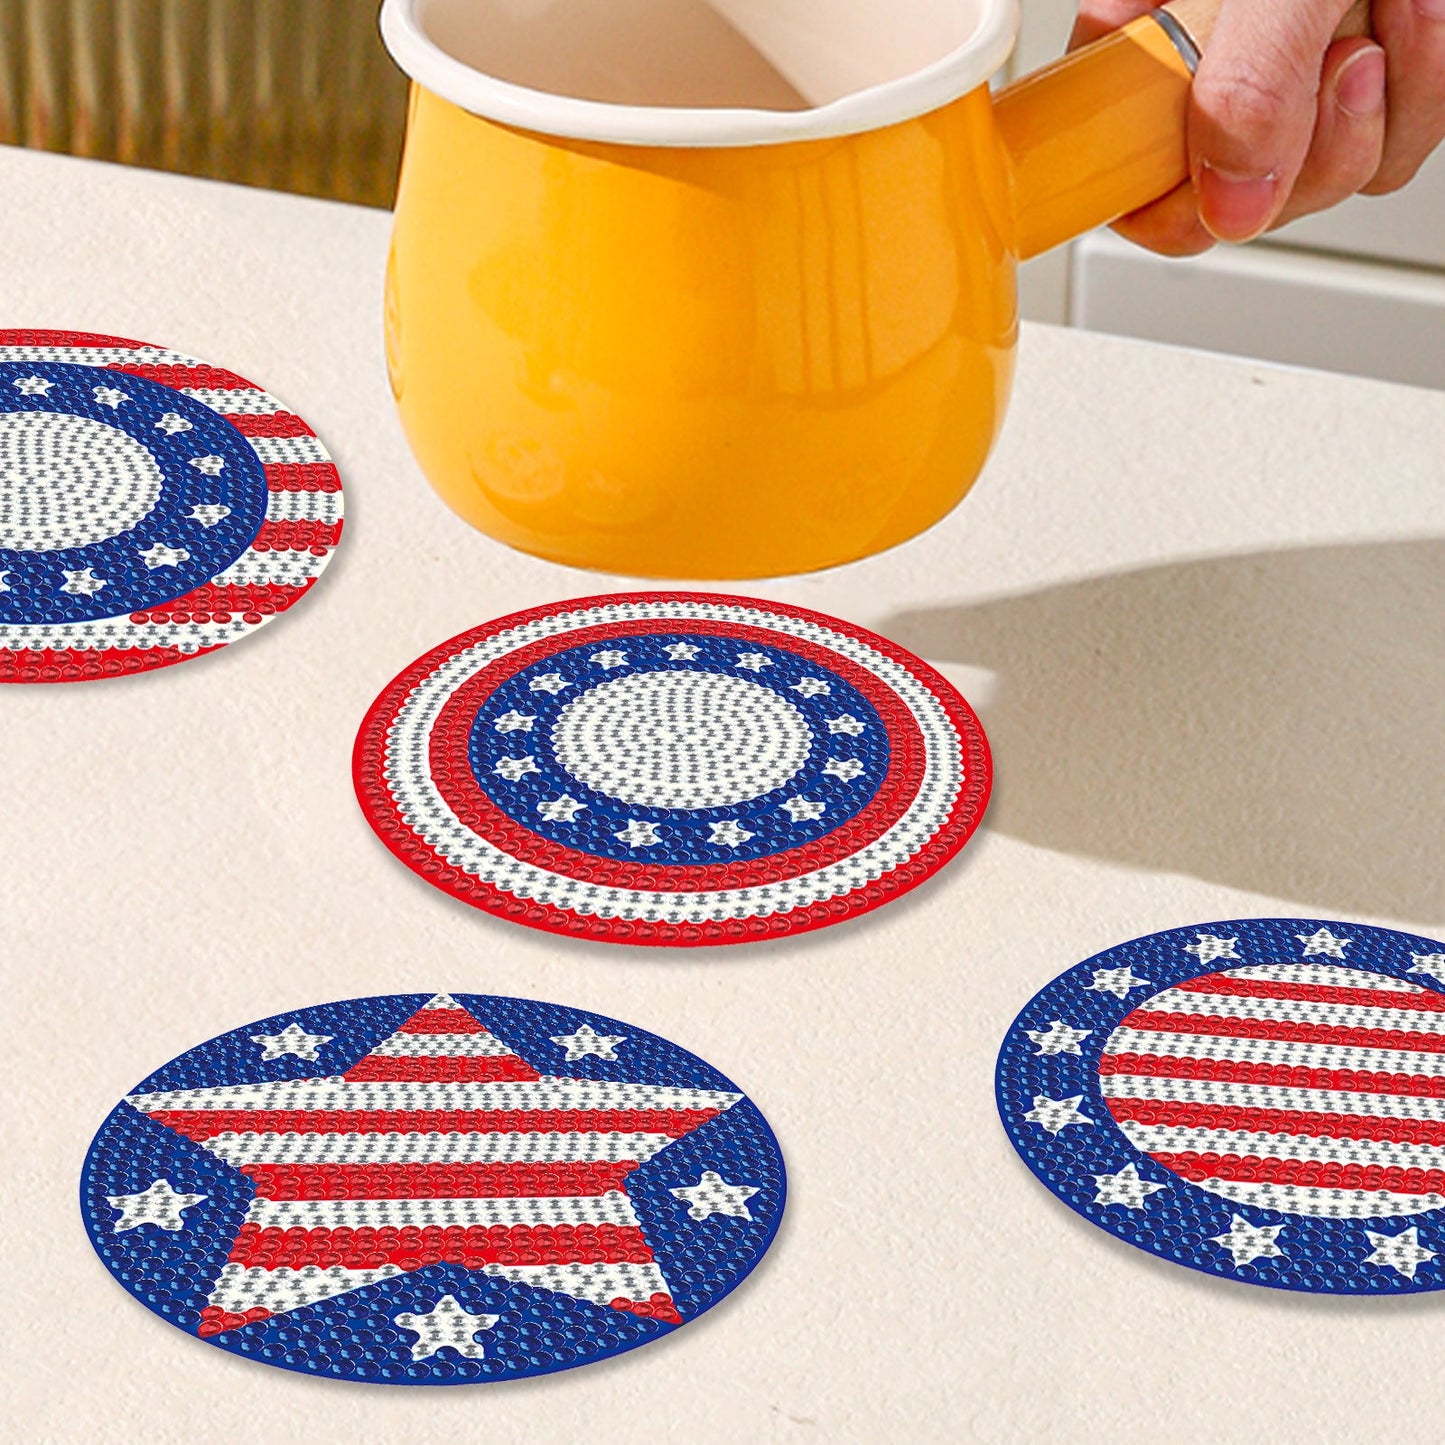 8 pcs set DIY Special Shaped Diamond Painting Coaster | American flag